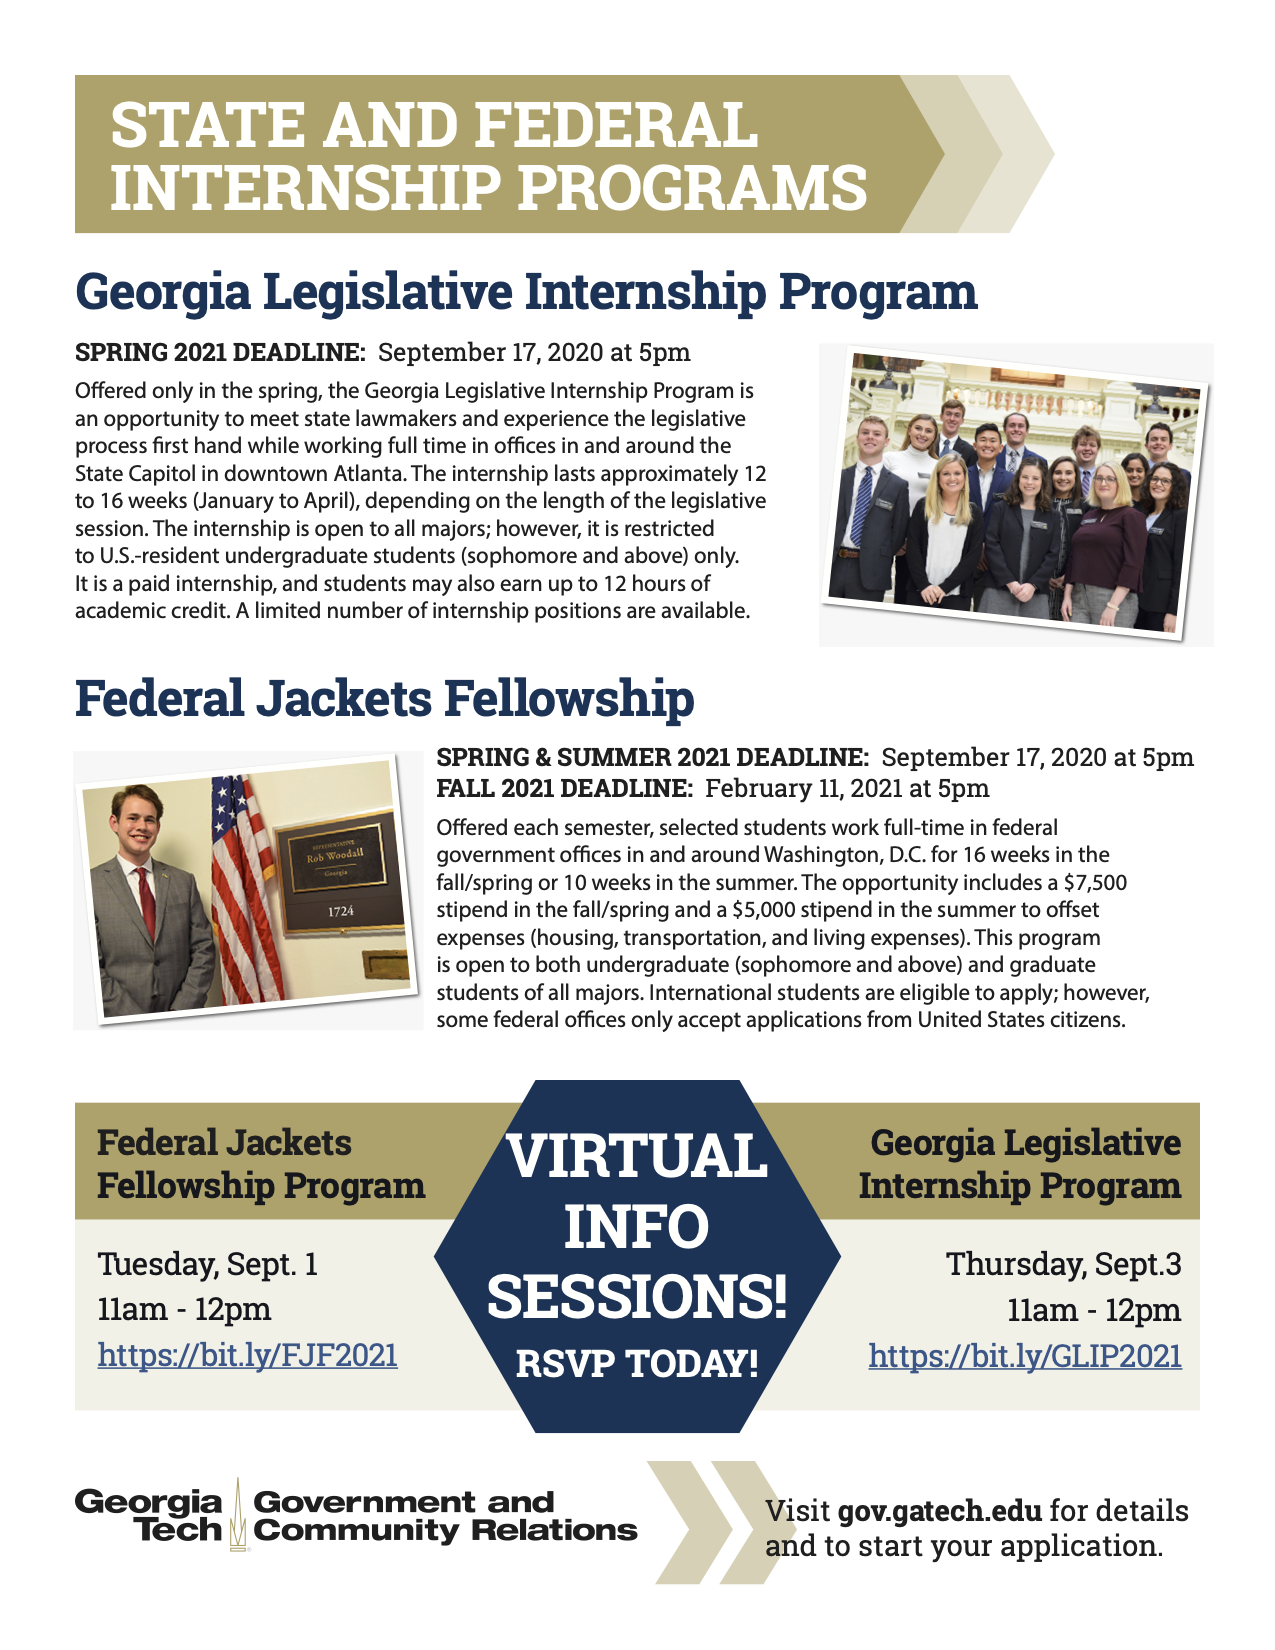 federal job internships